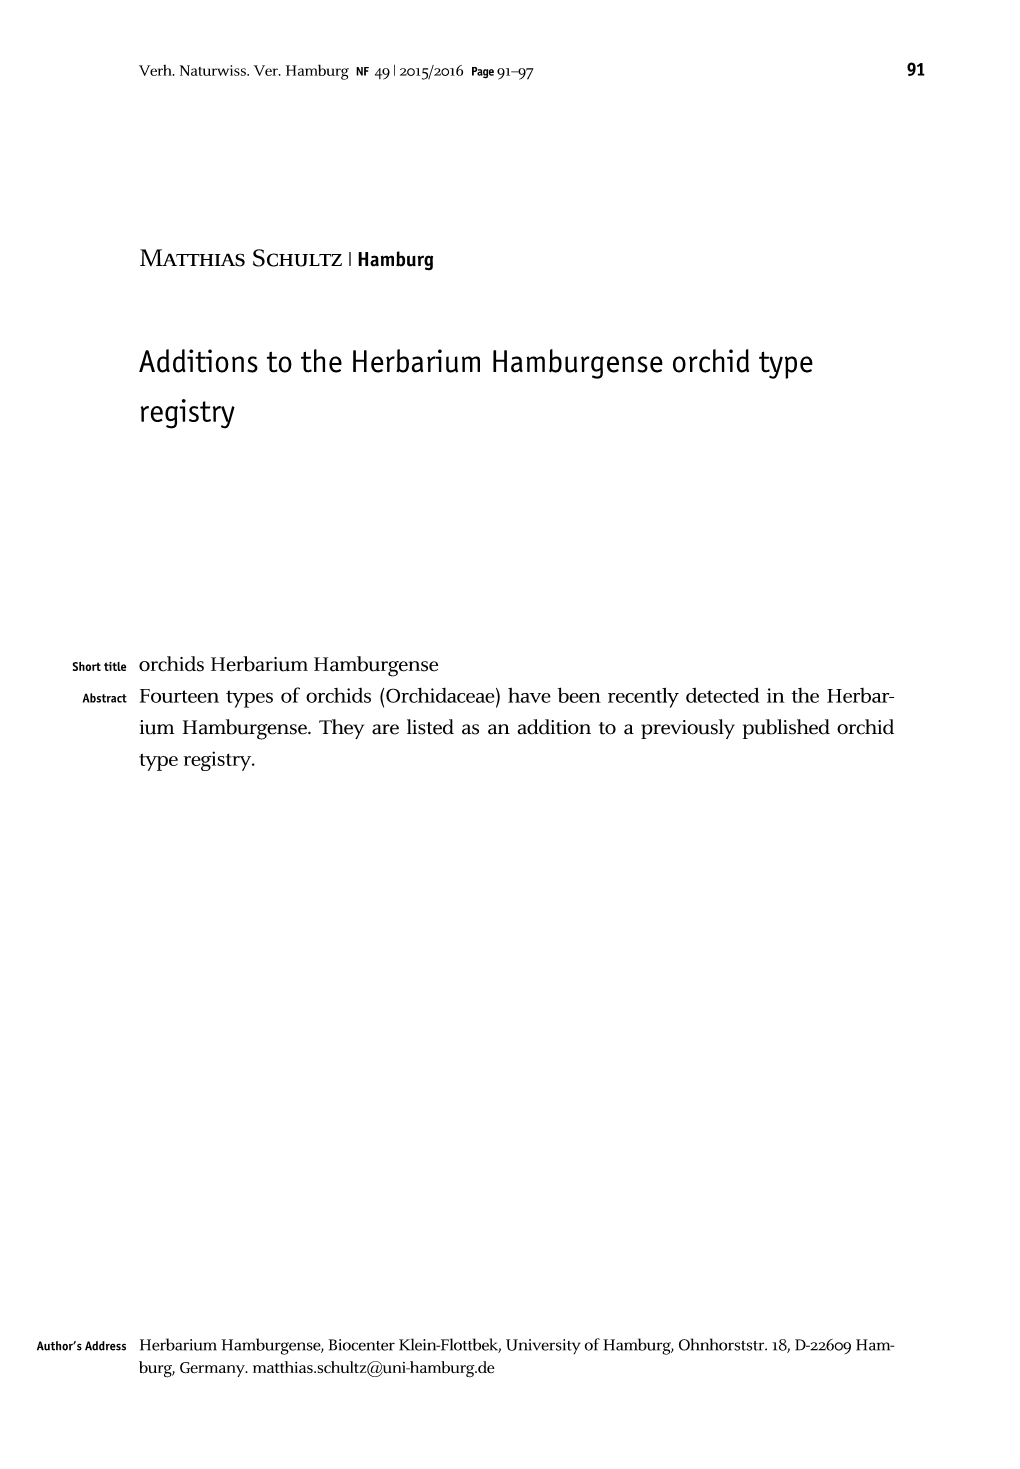 Additions to the Herbarium Hamburgense Orchid Type Registry